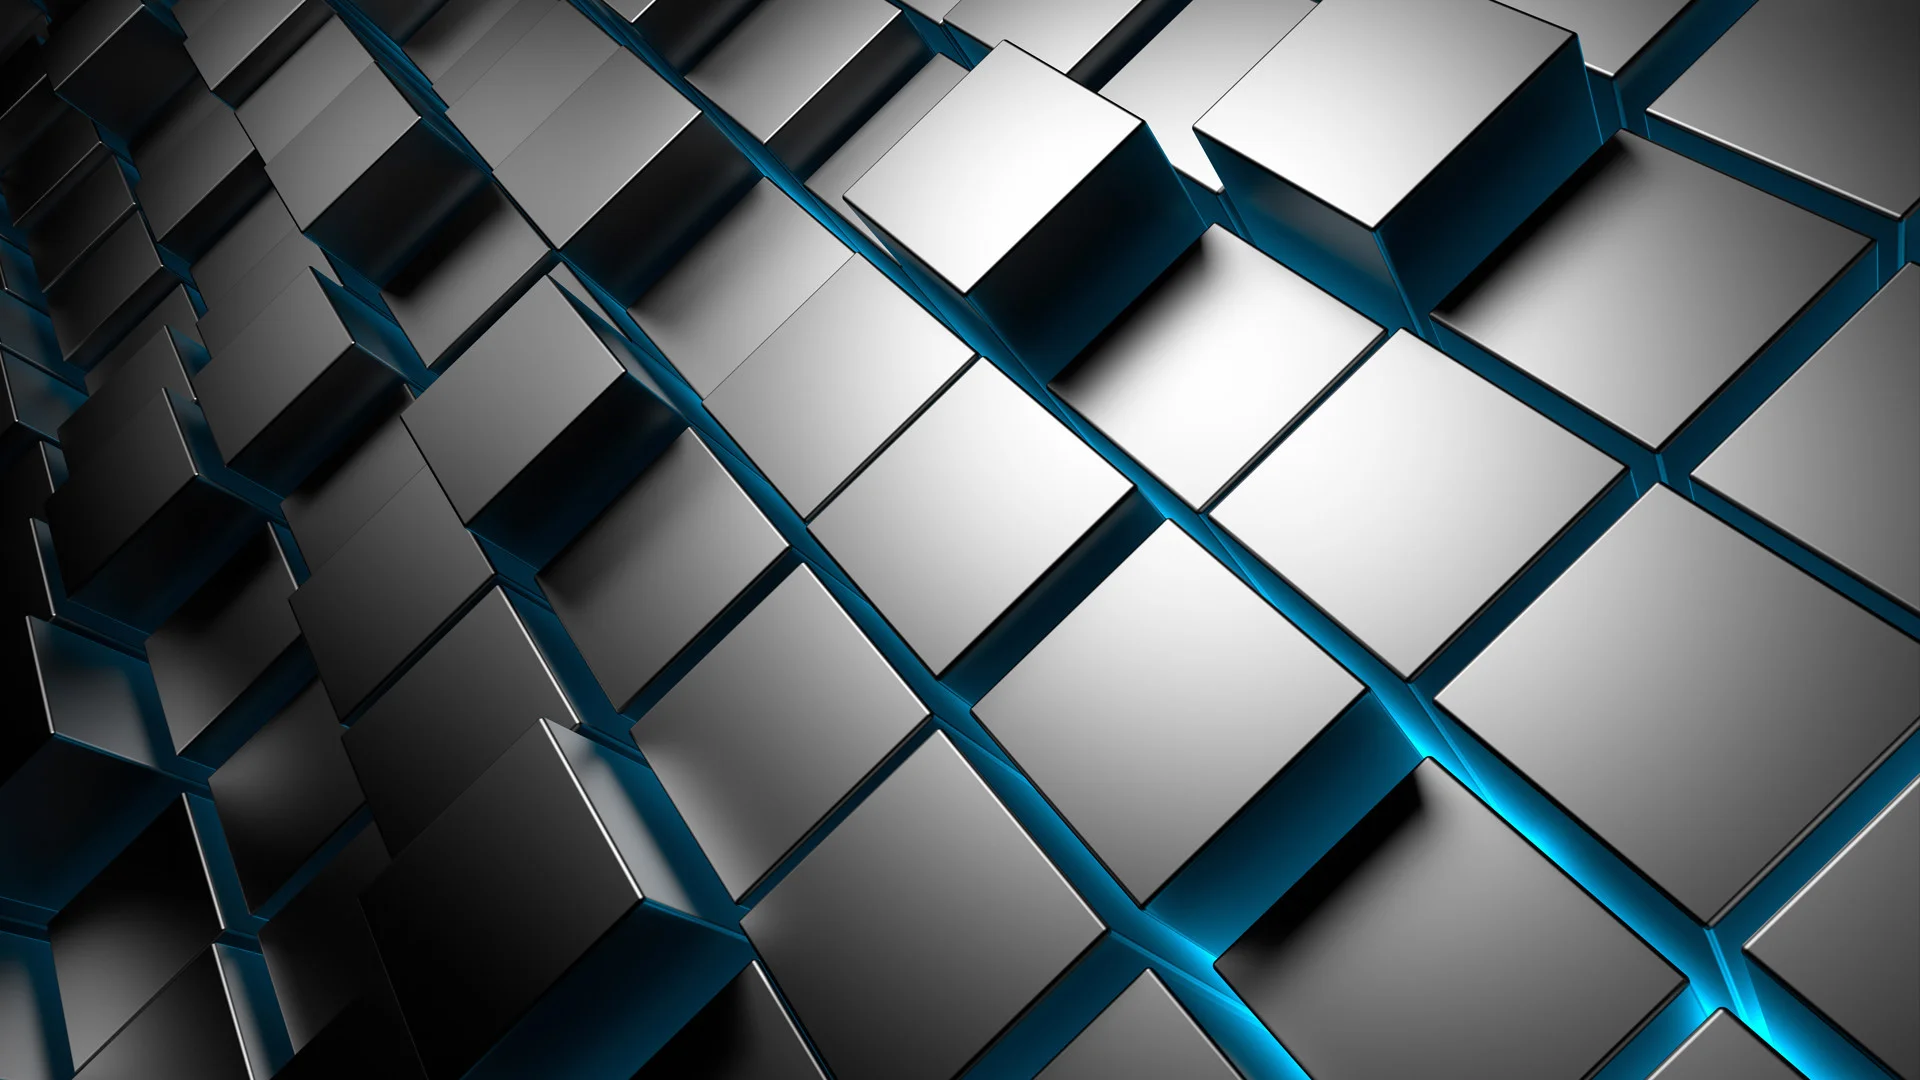 Animated Matrix Wallpaper Windows | HD Wallpapers | Pinterest .